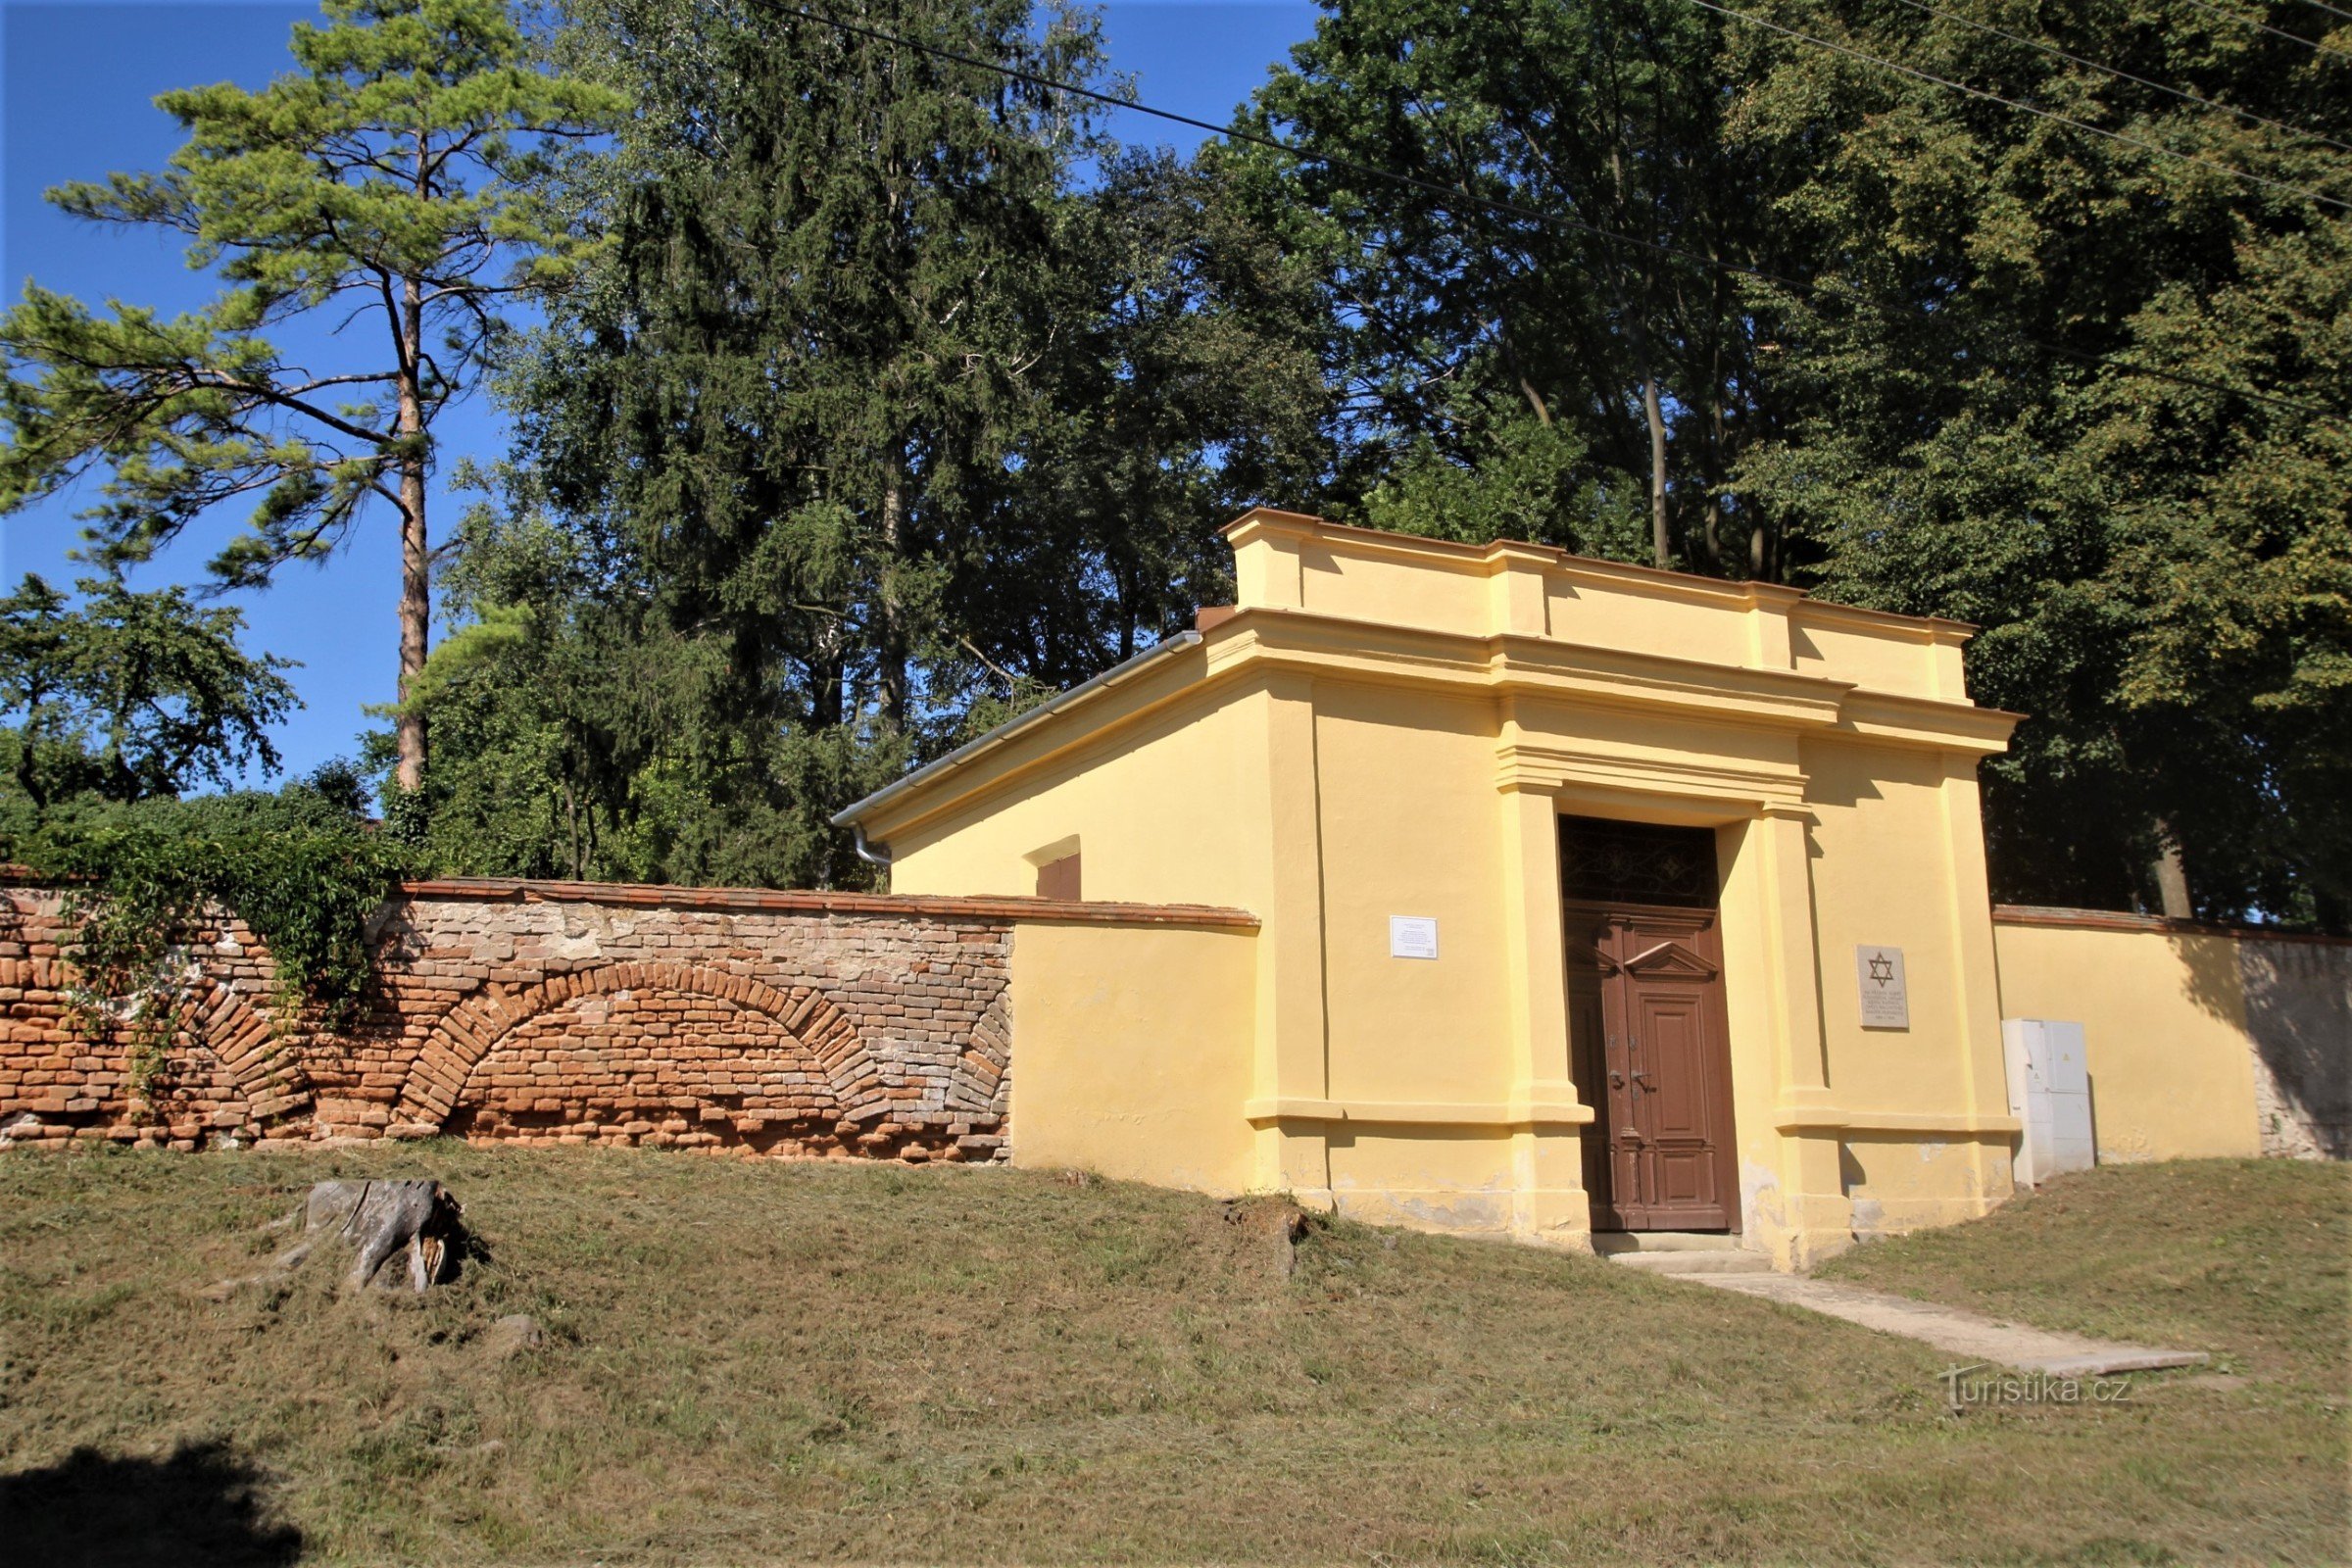 Bučovice - jødisk kirkegård